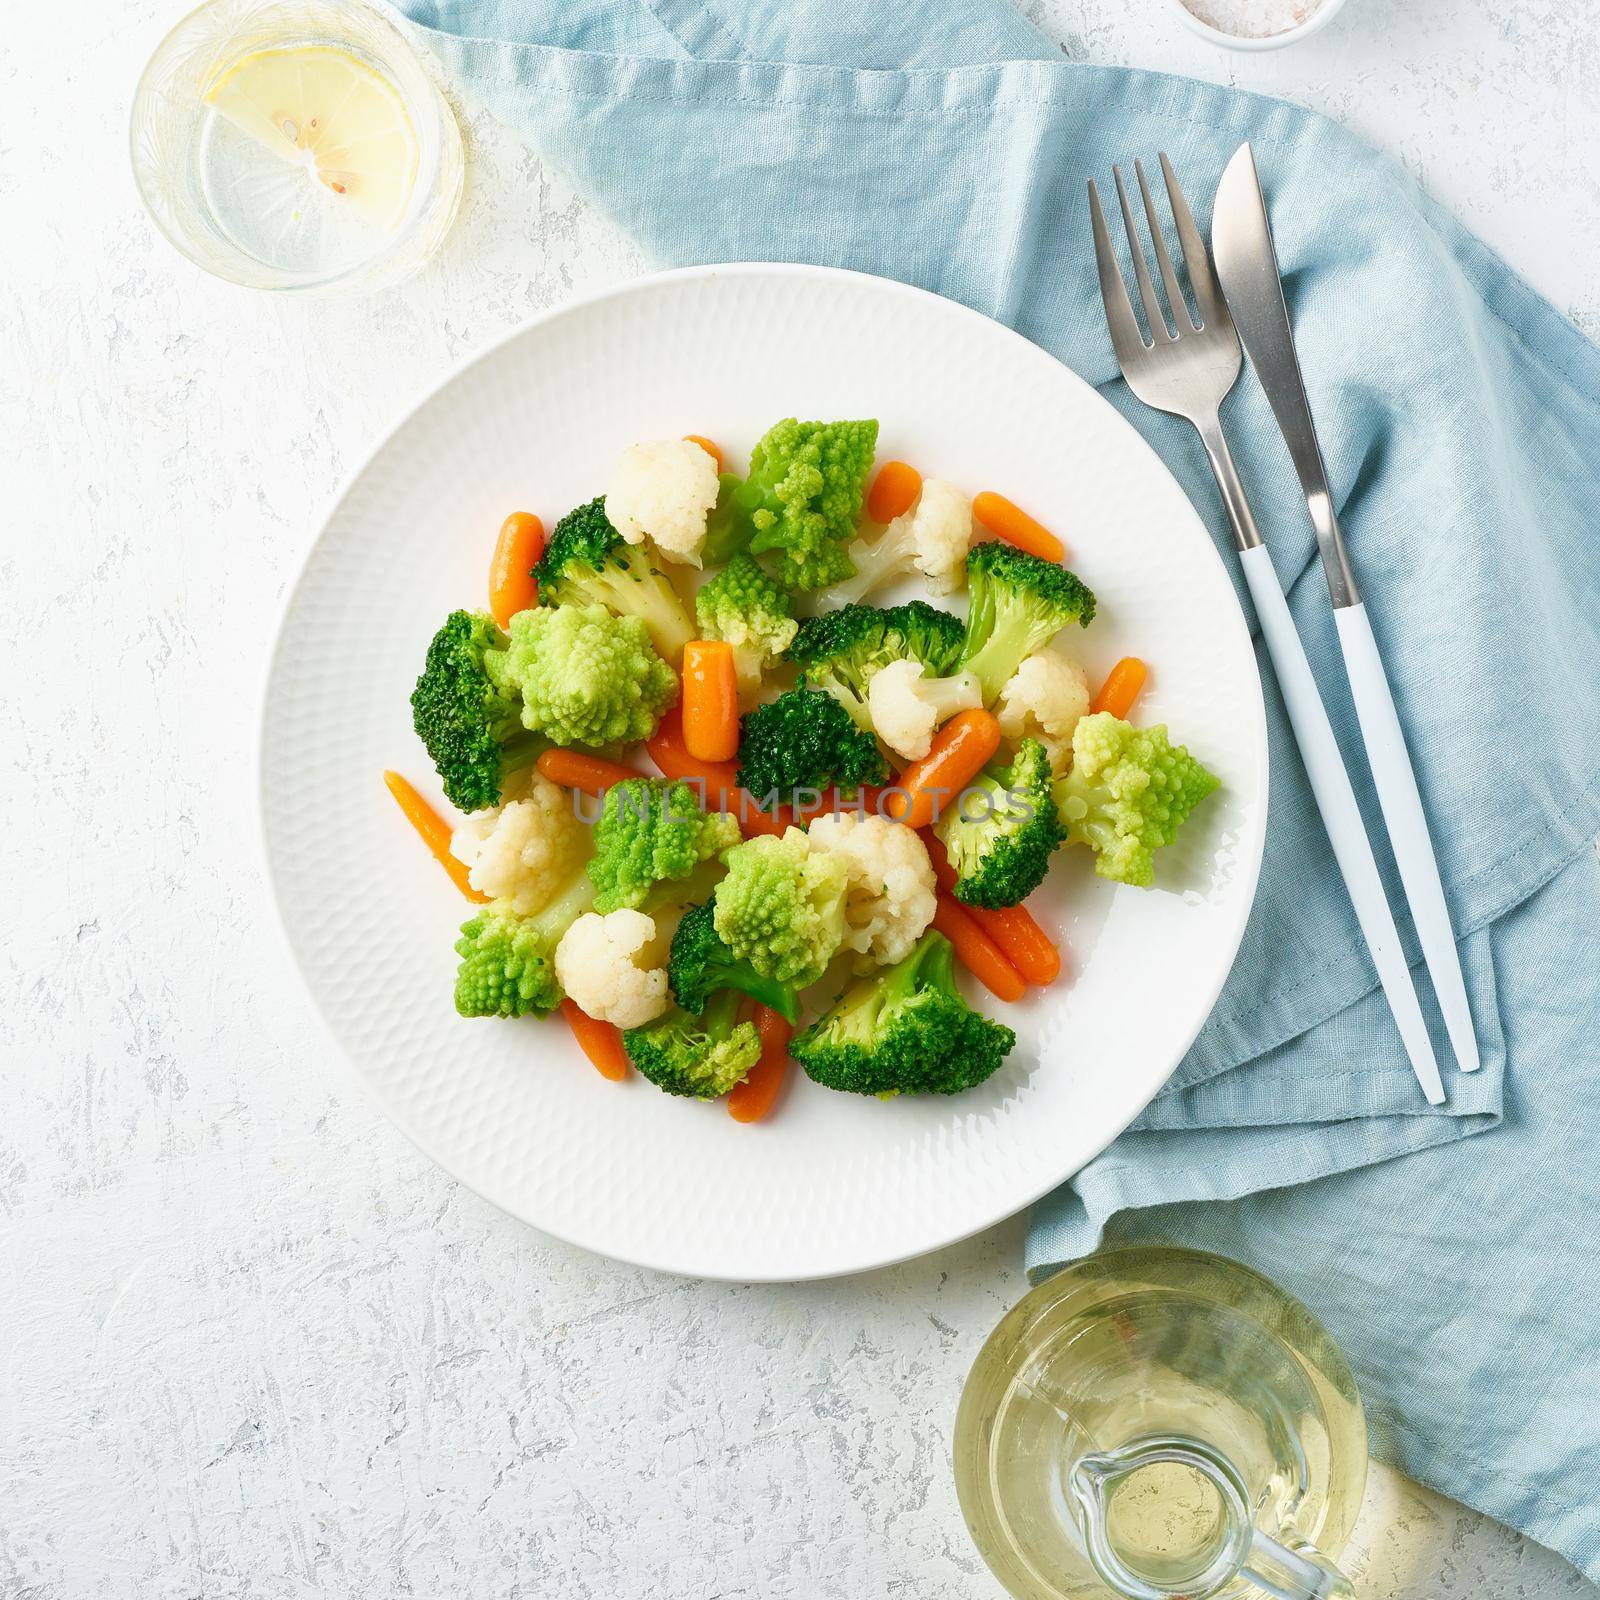 Mix of boiled vegetables. Broccoli, carrots, cauliflower. Steamed vegetables for dietary low-calorie diet. FODMAP, dash diet, vegan, vegetarian, top view